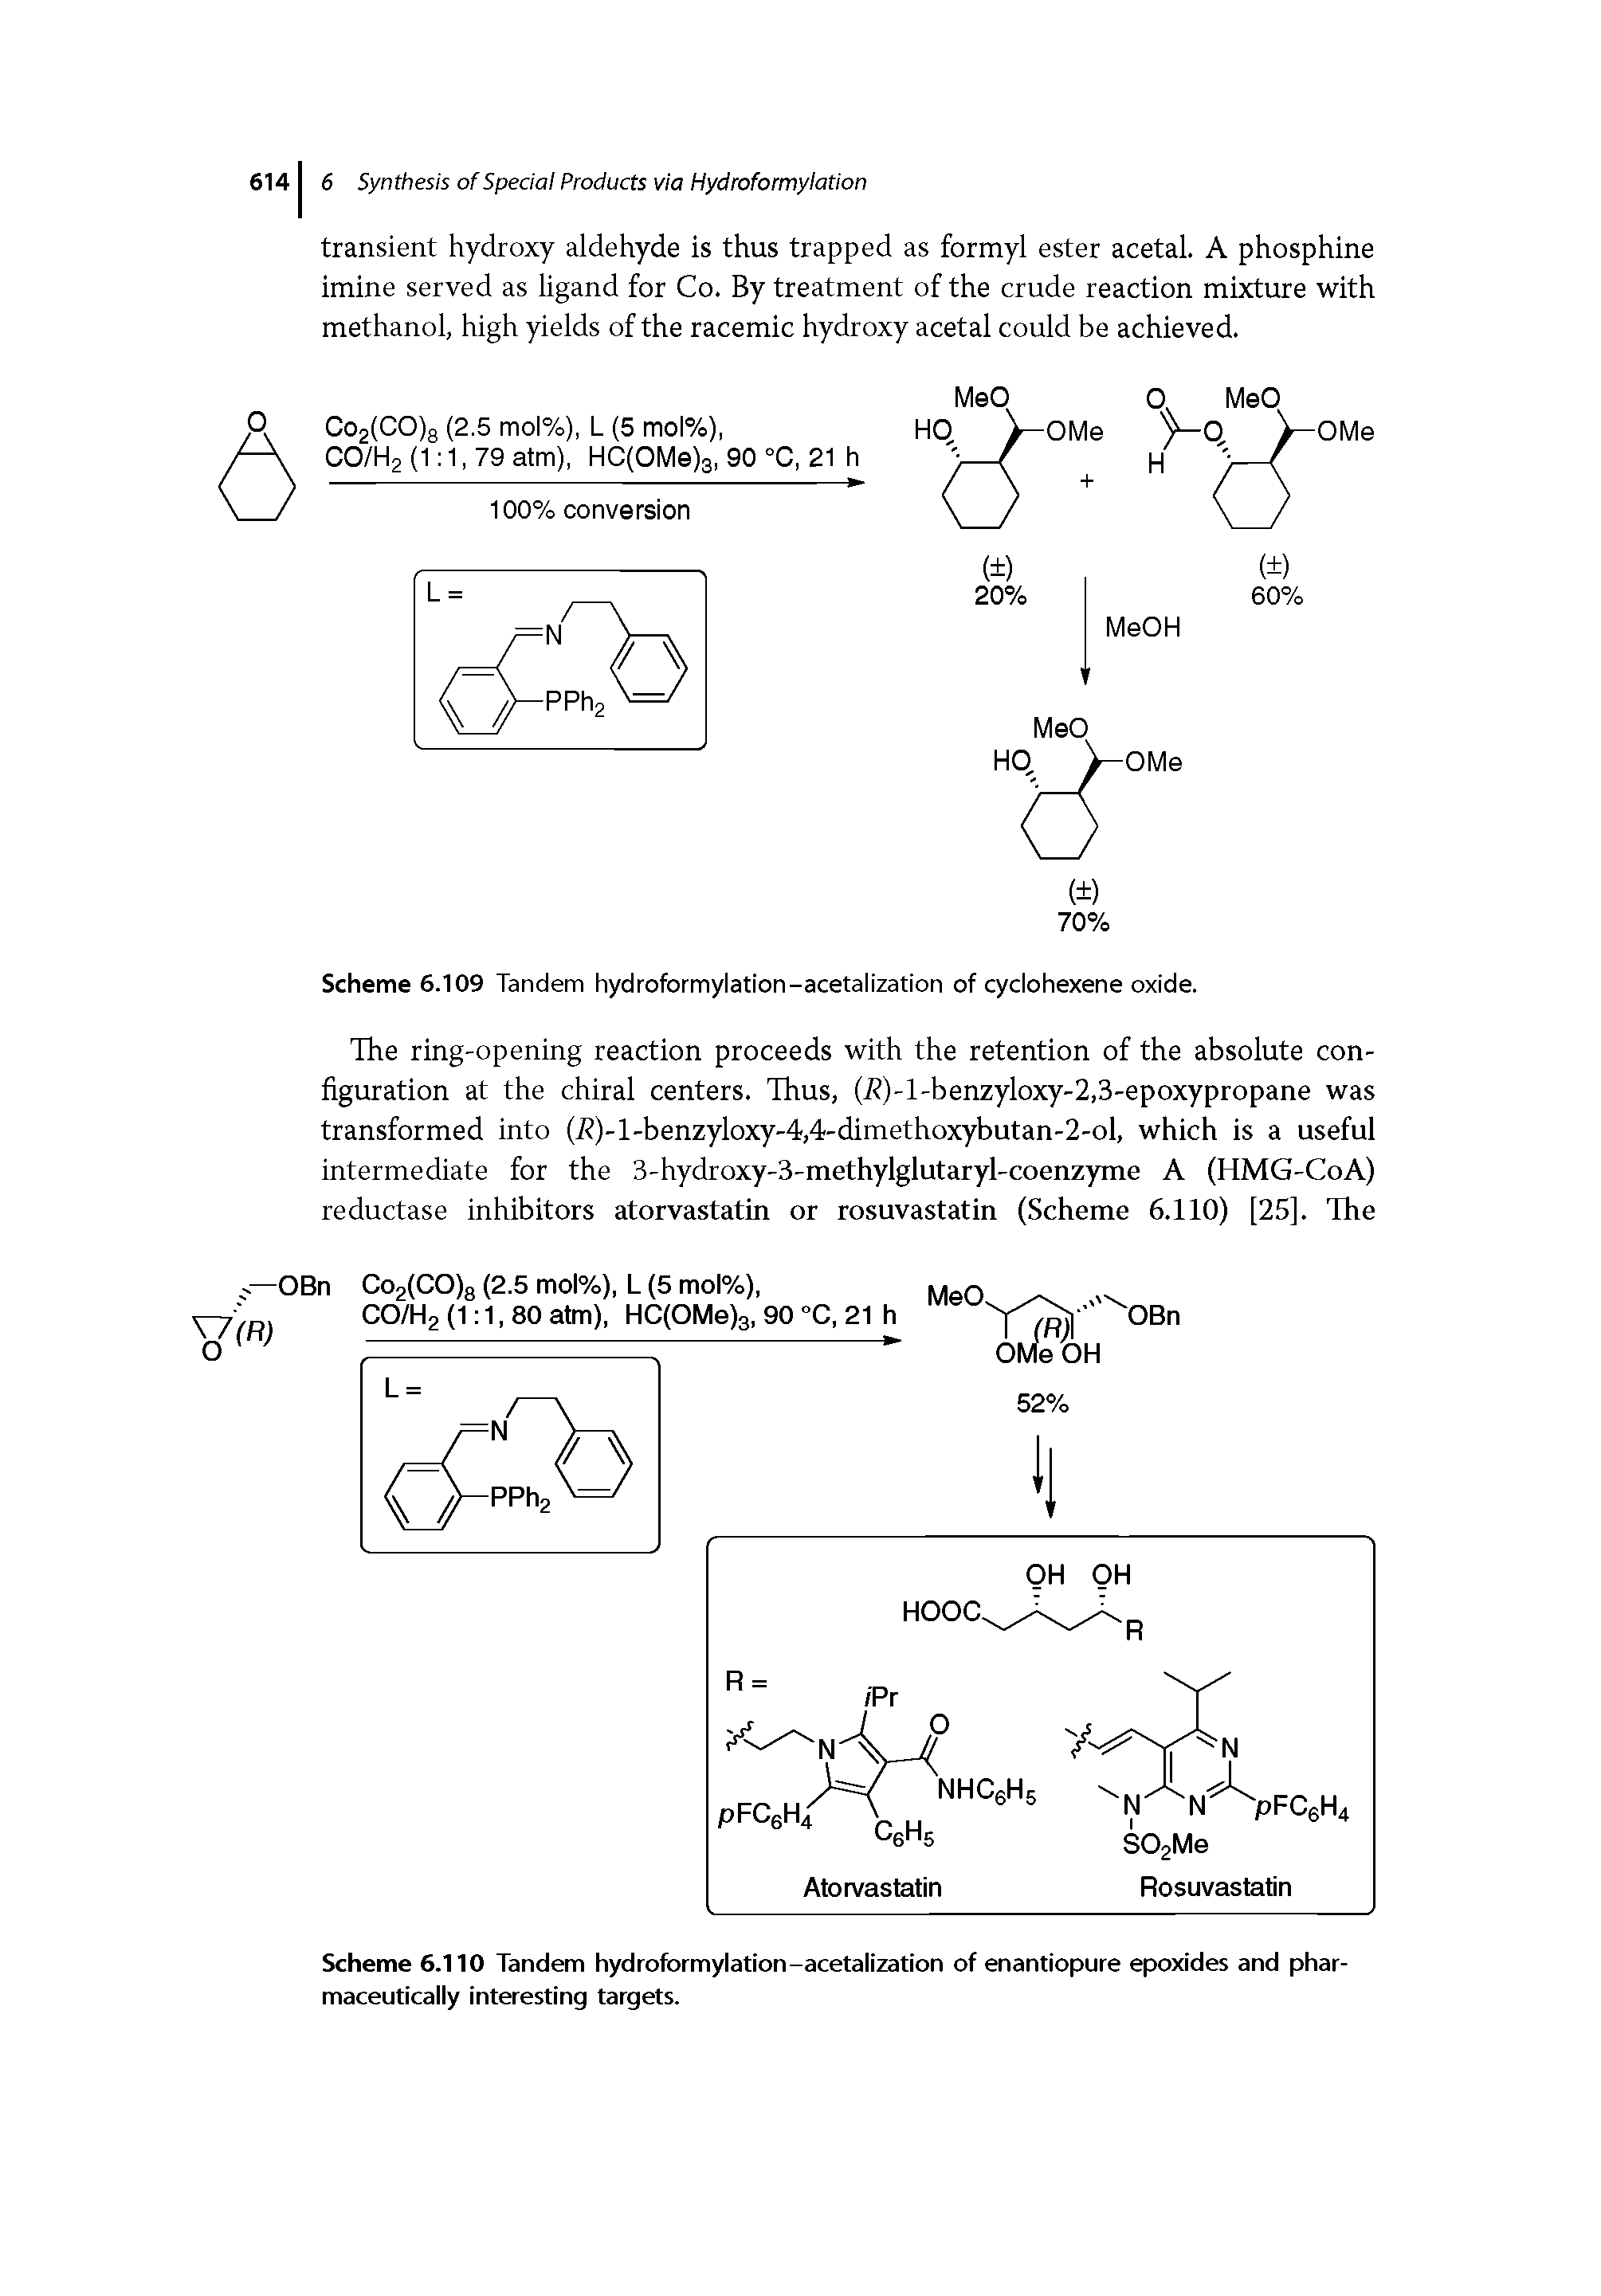 Scheme 6.109 Tandem hydroformylation-acetalization of cyclohexene oxide.